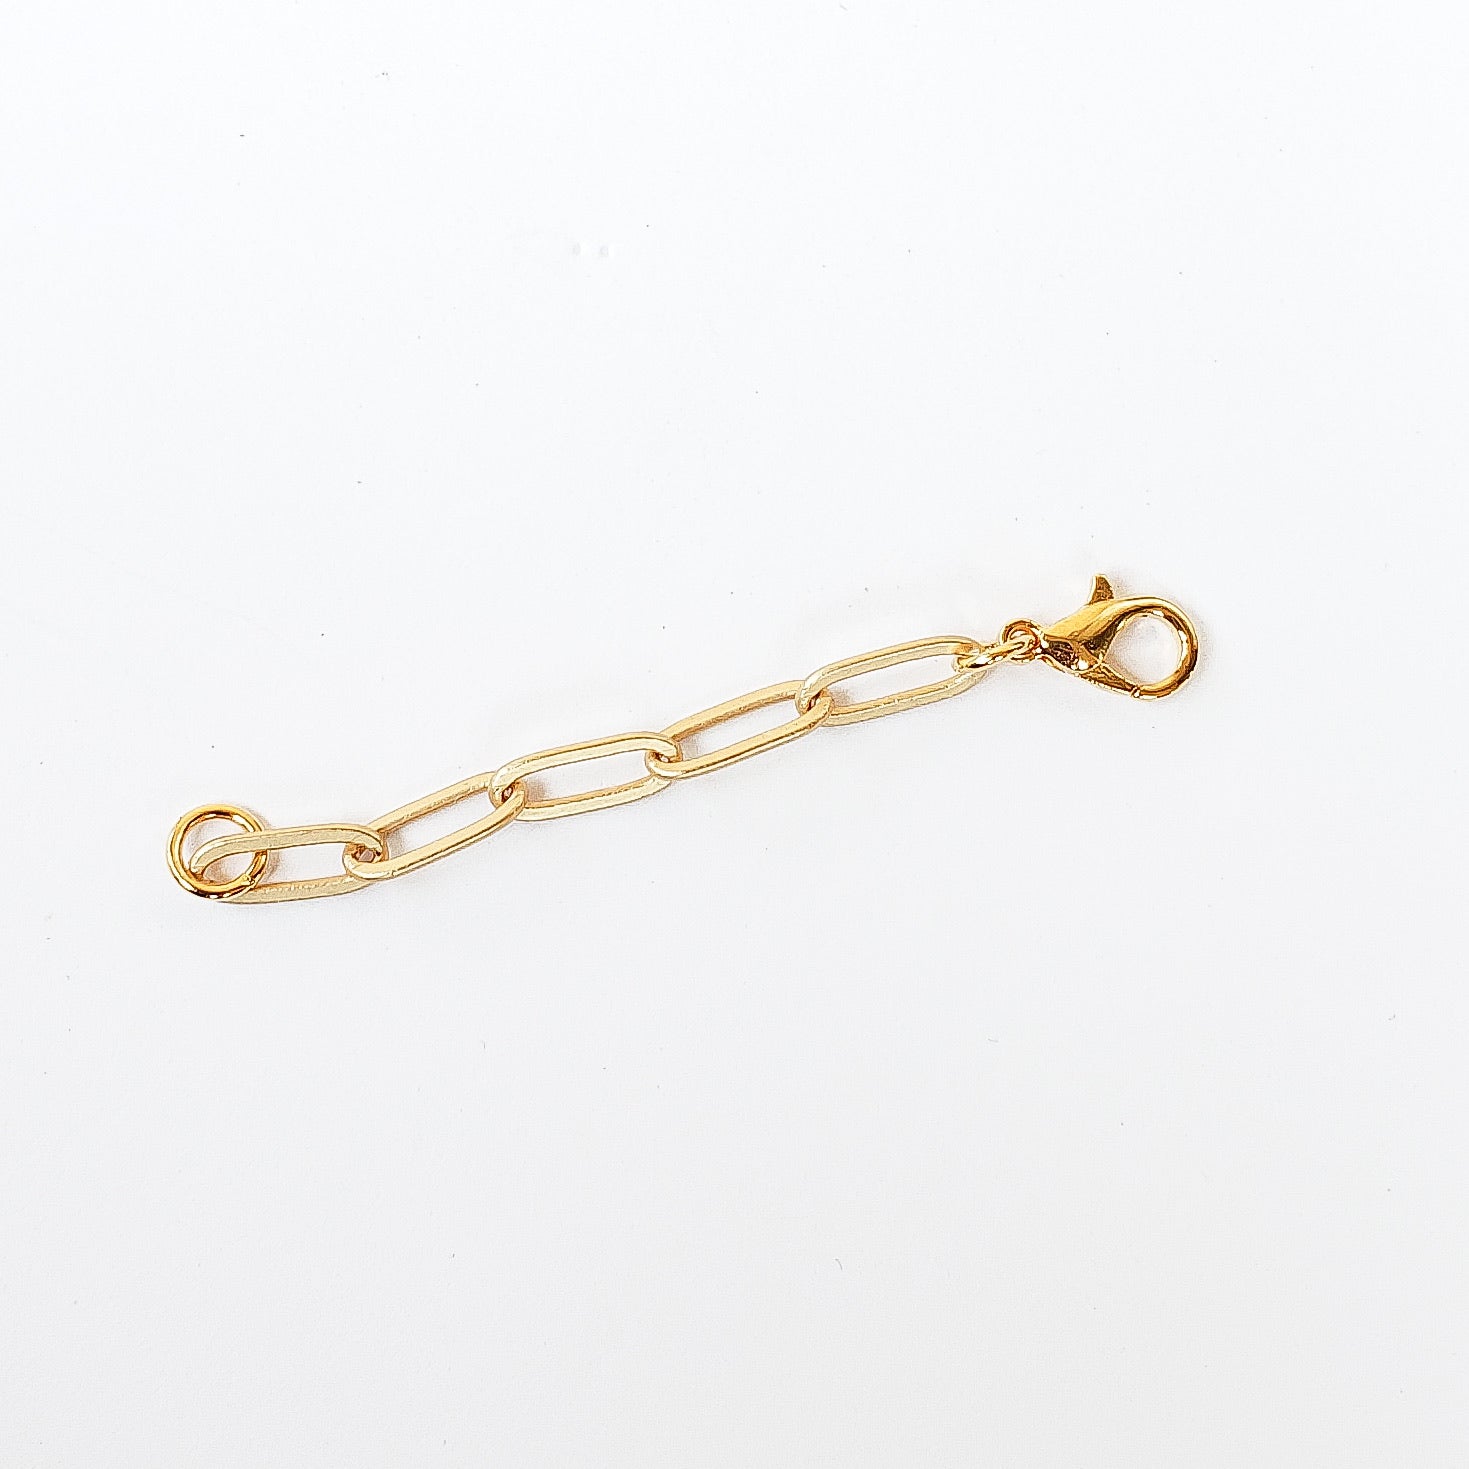 Paperclip Necklace or Bracelet Extender